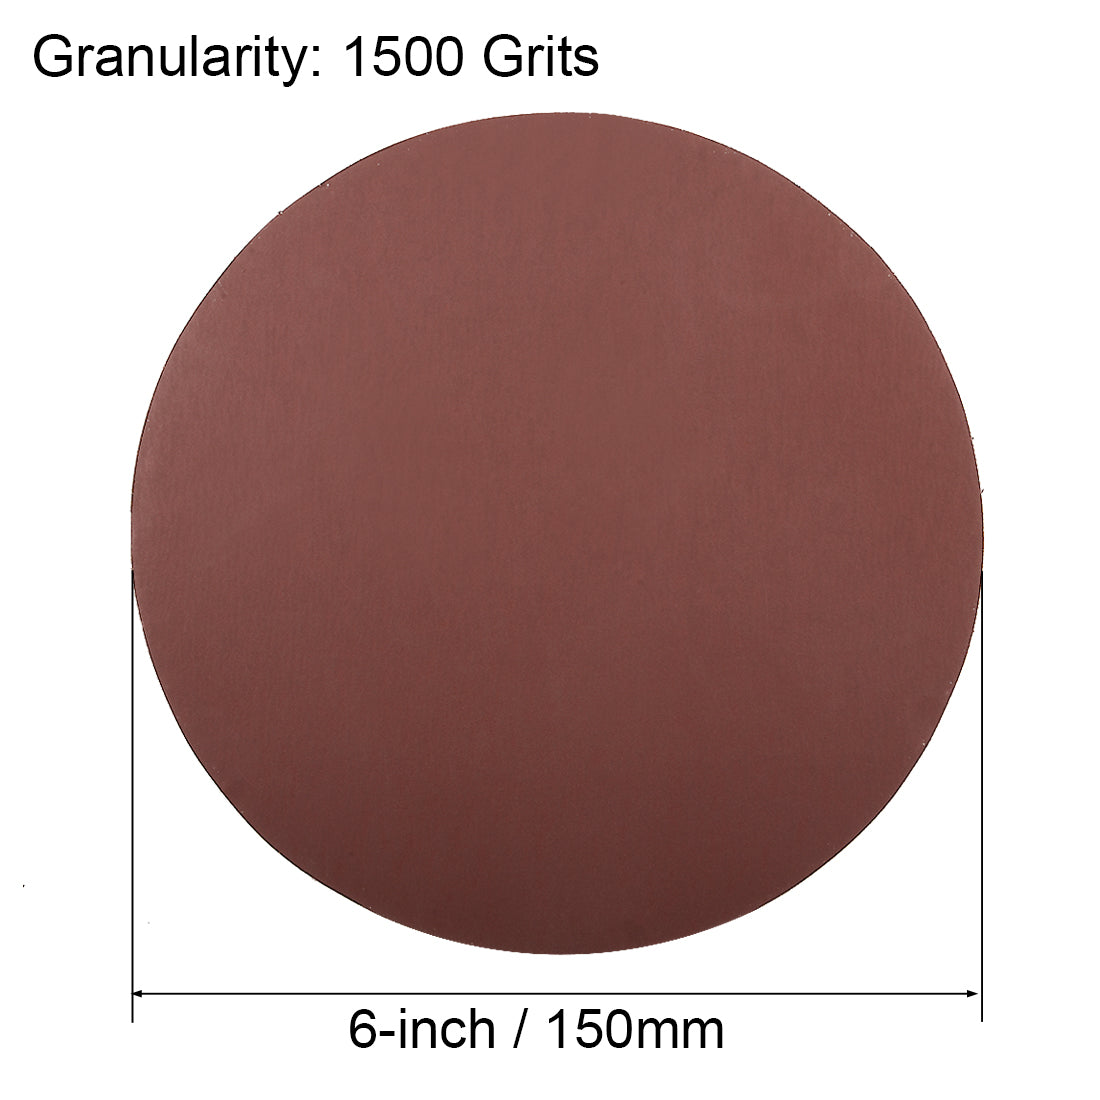 uxcell Uxcell 6-inch 1500-Grits PSA Sanding Disc, Adhesive-Backed Sanding Sheets Aluminum Oxide Sandpaper for Random Orbital Sander 10pcs